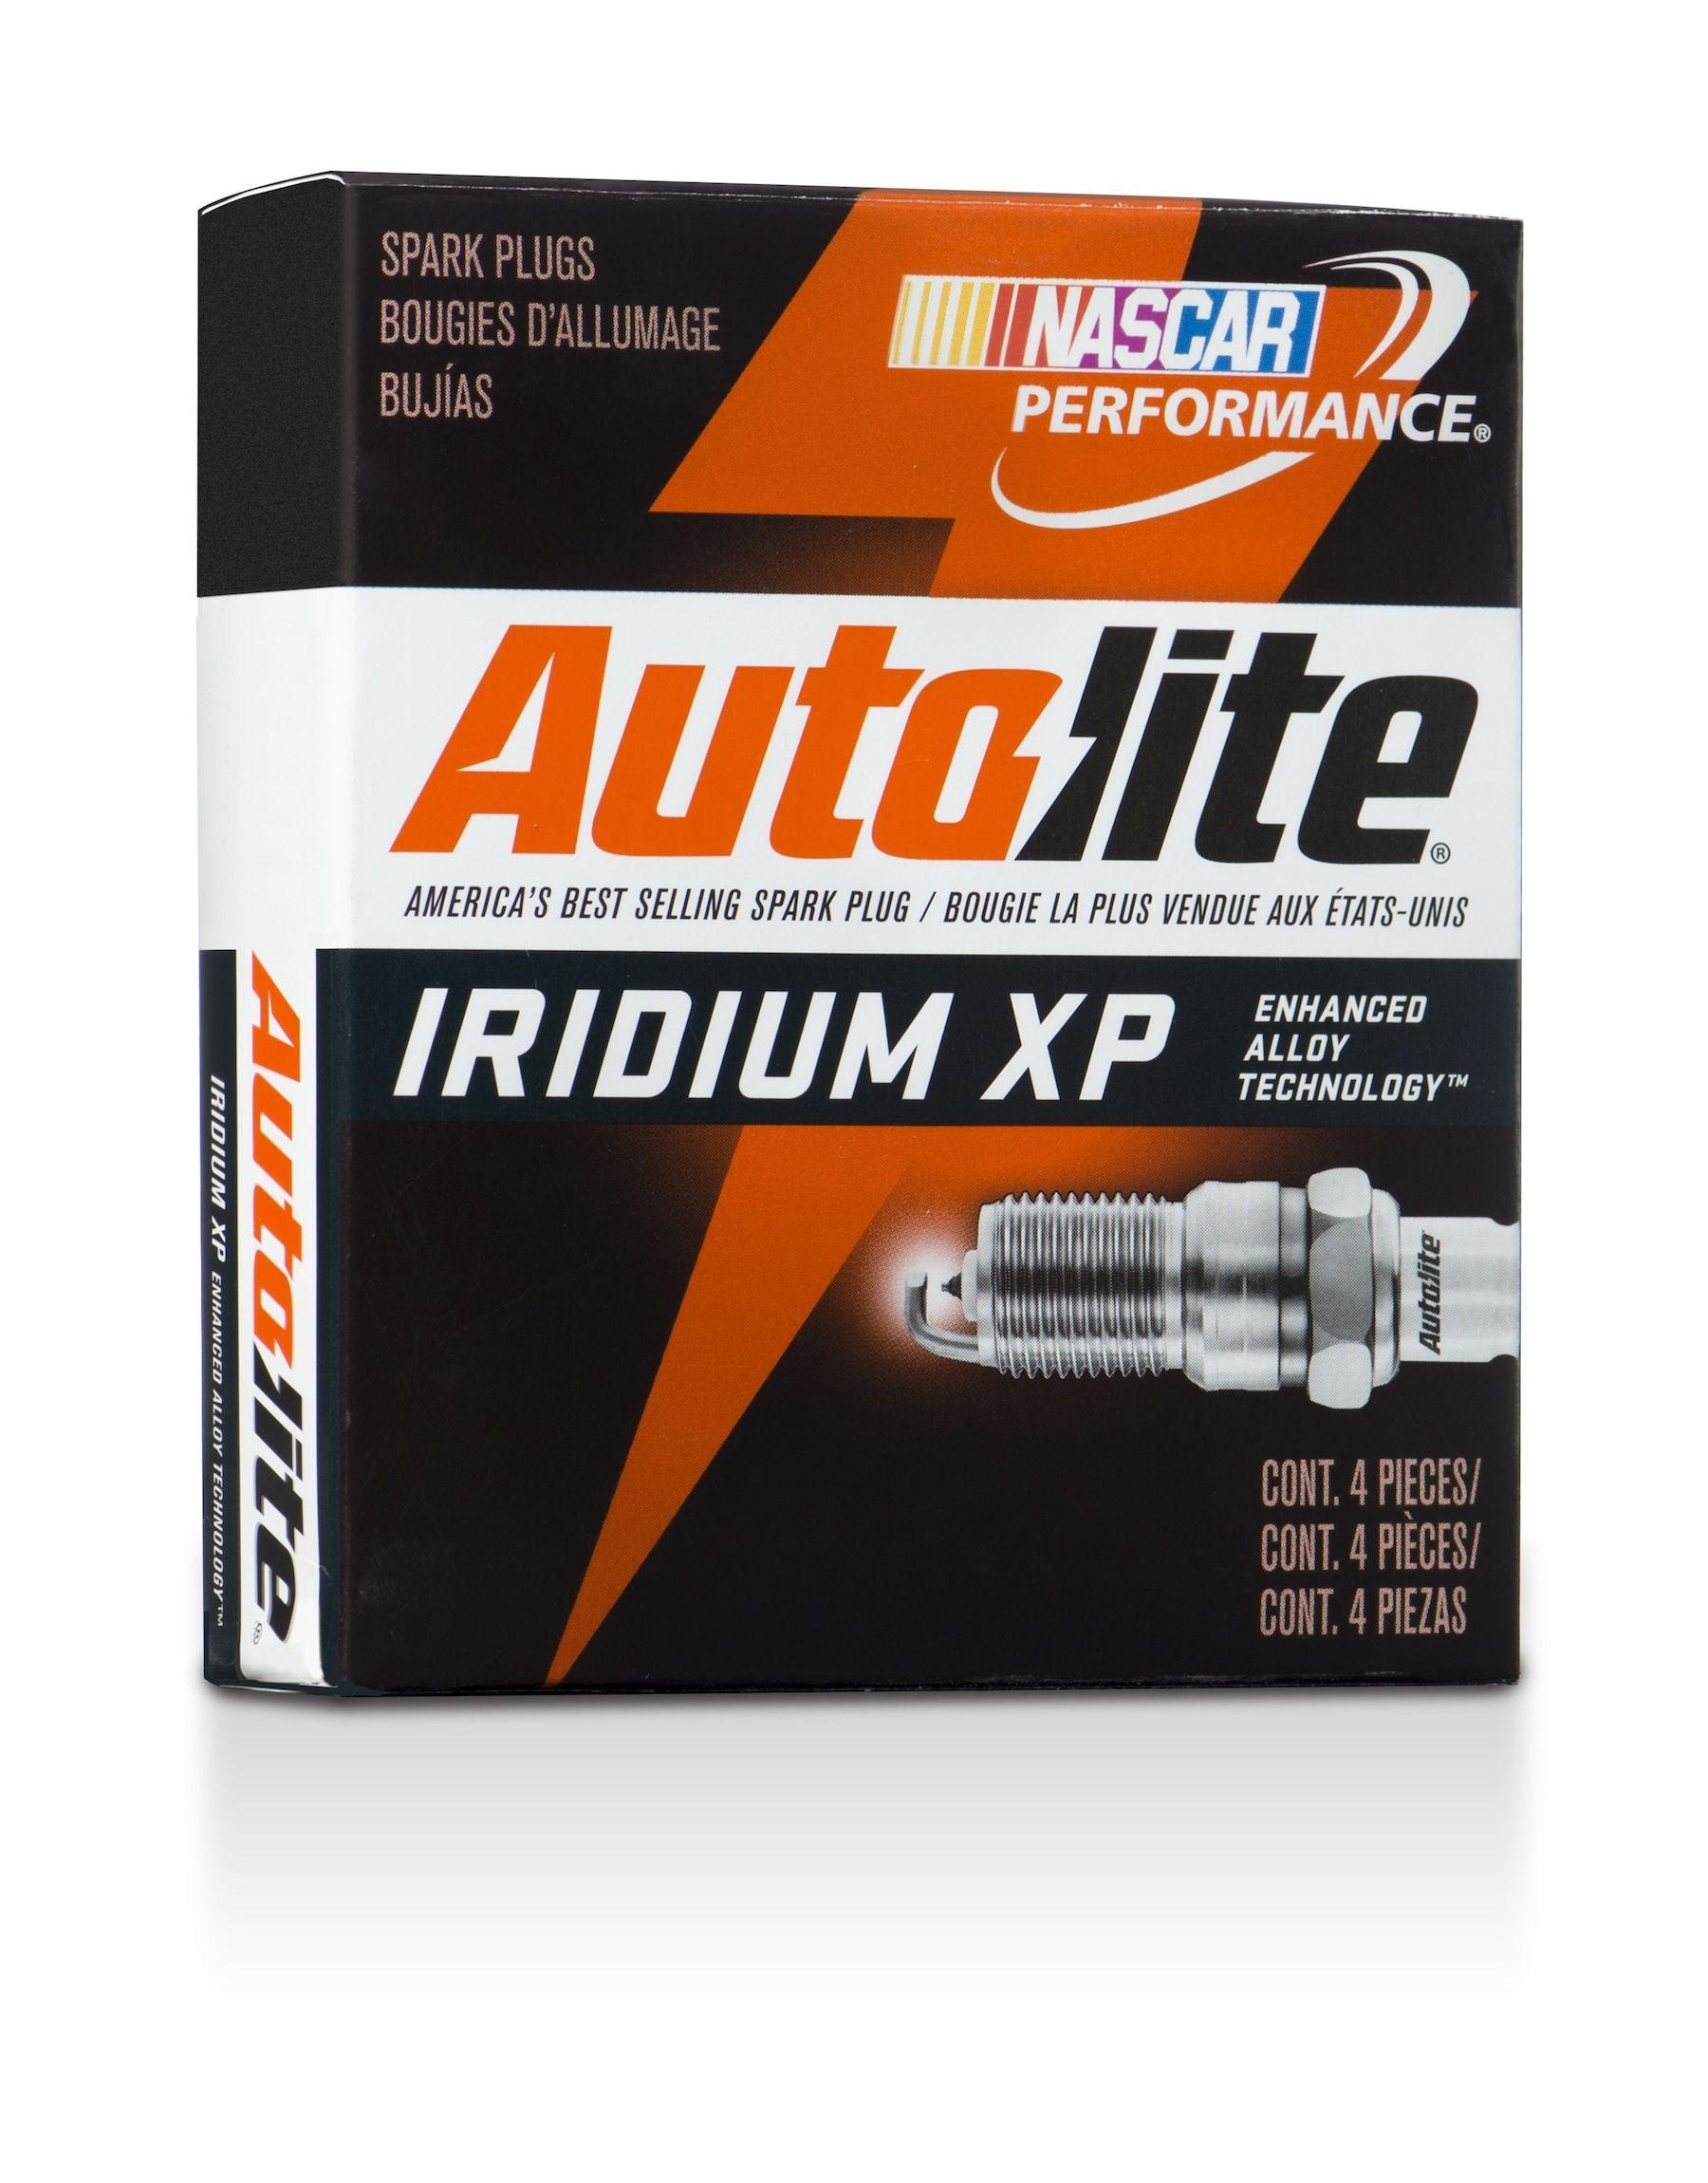 New Autolite Spark Plugs Logo - New Lifetime Limited Warranty On Autolite Iridium XP Enhanced Alloy